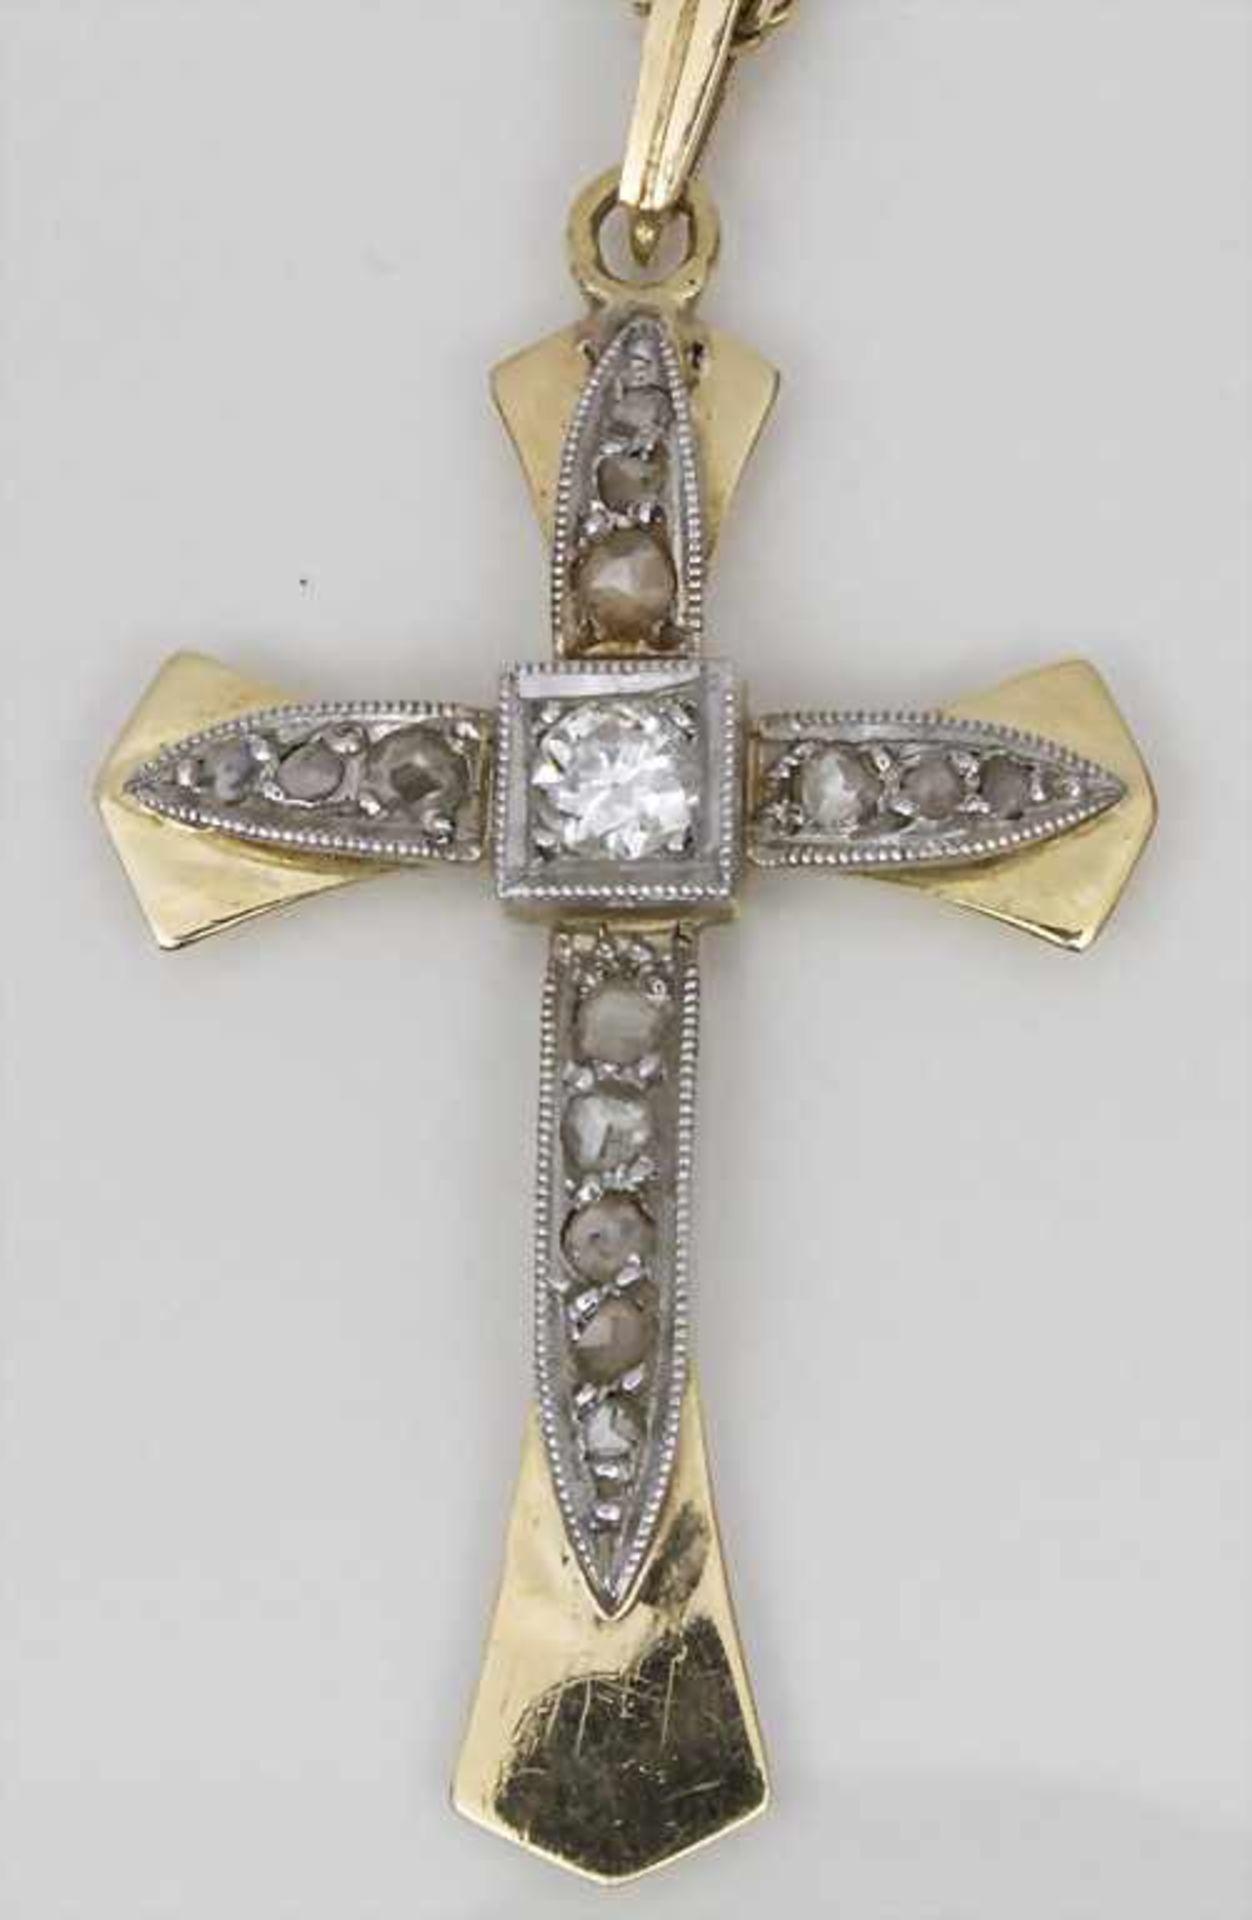 Diamantbesetztes Kreuz / A cross with diamonds, um 1900 Material: Gelbgold 750/000 18 Kt, 14